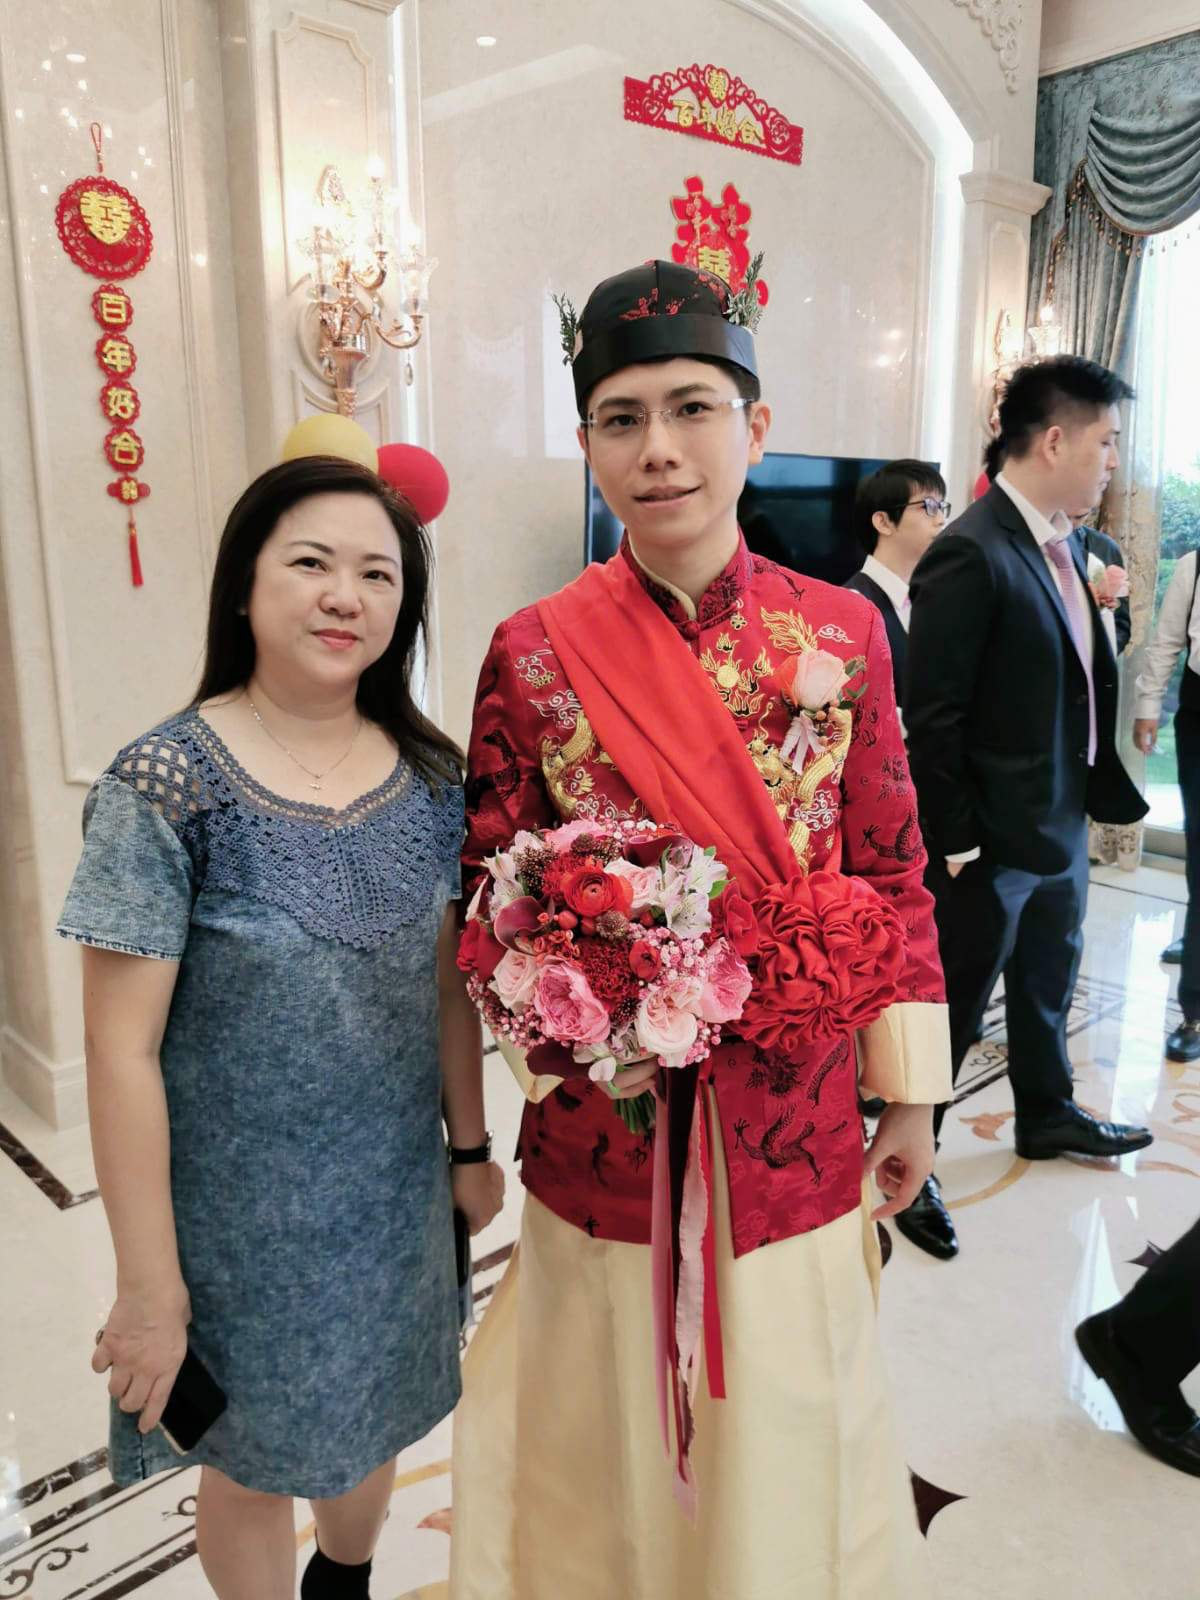 Queeny Ng婚禮統籌師工作紀錄: Grand Hyatt 中式婚禮統籌